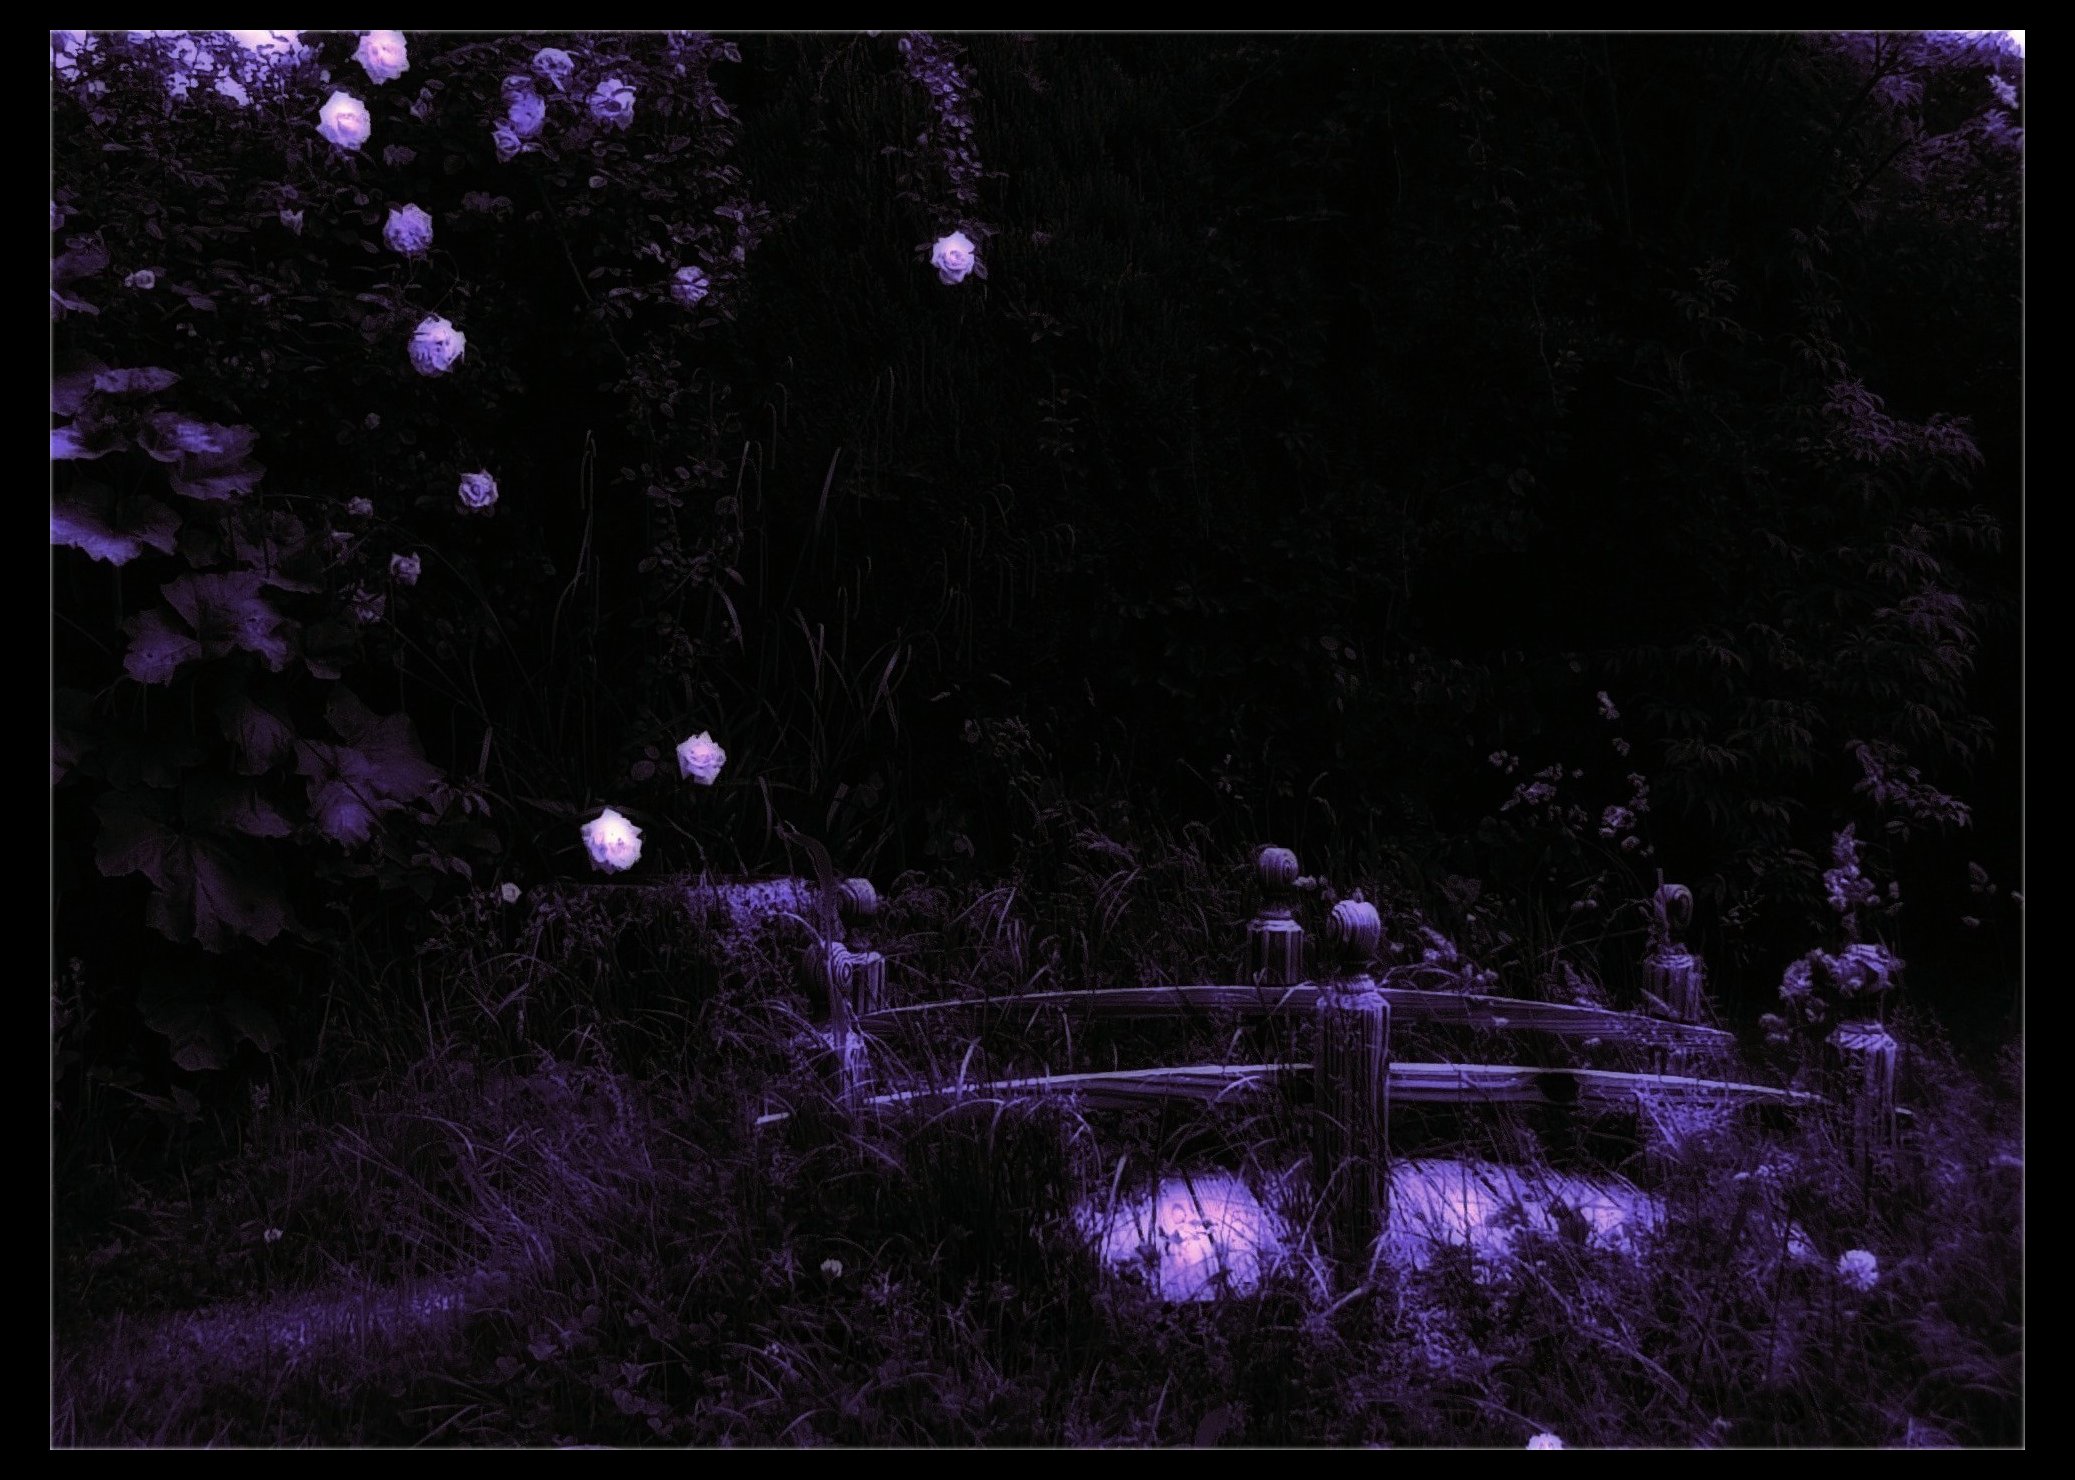 Moonlit Garden By Forestina Fotos On Deviantart